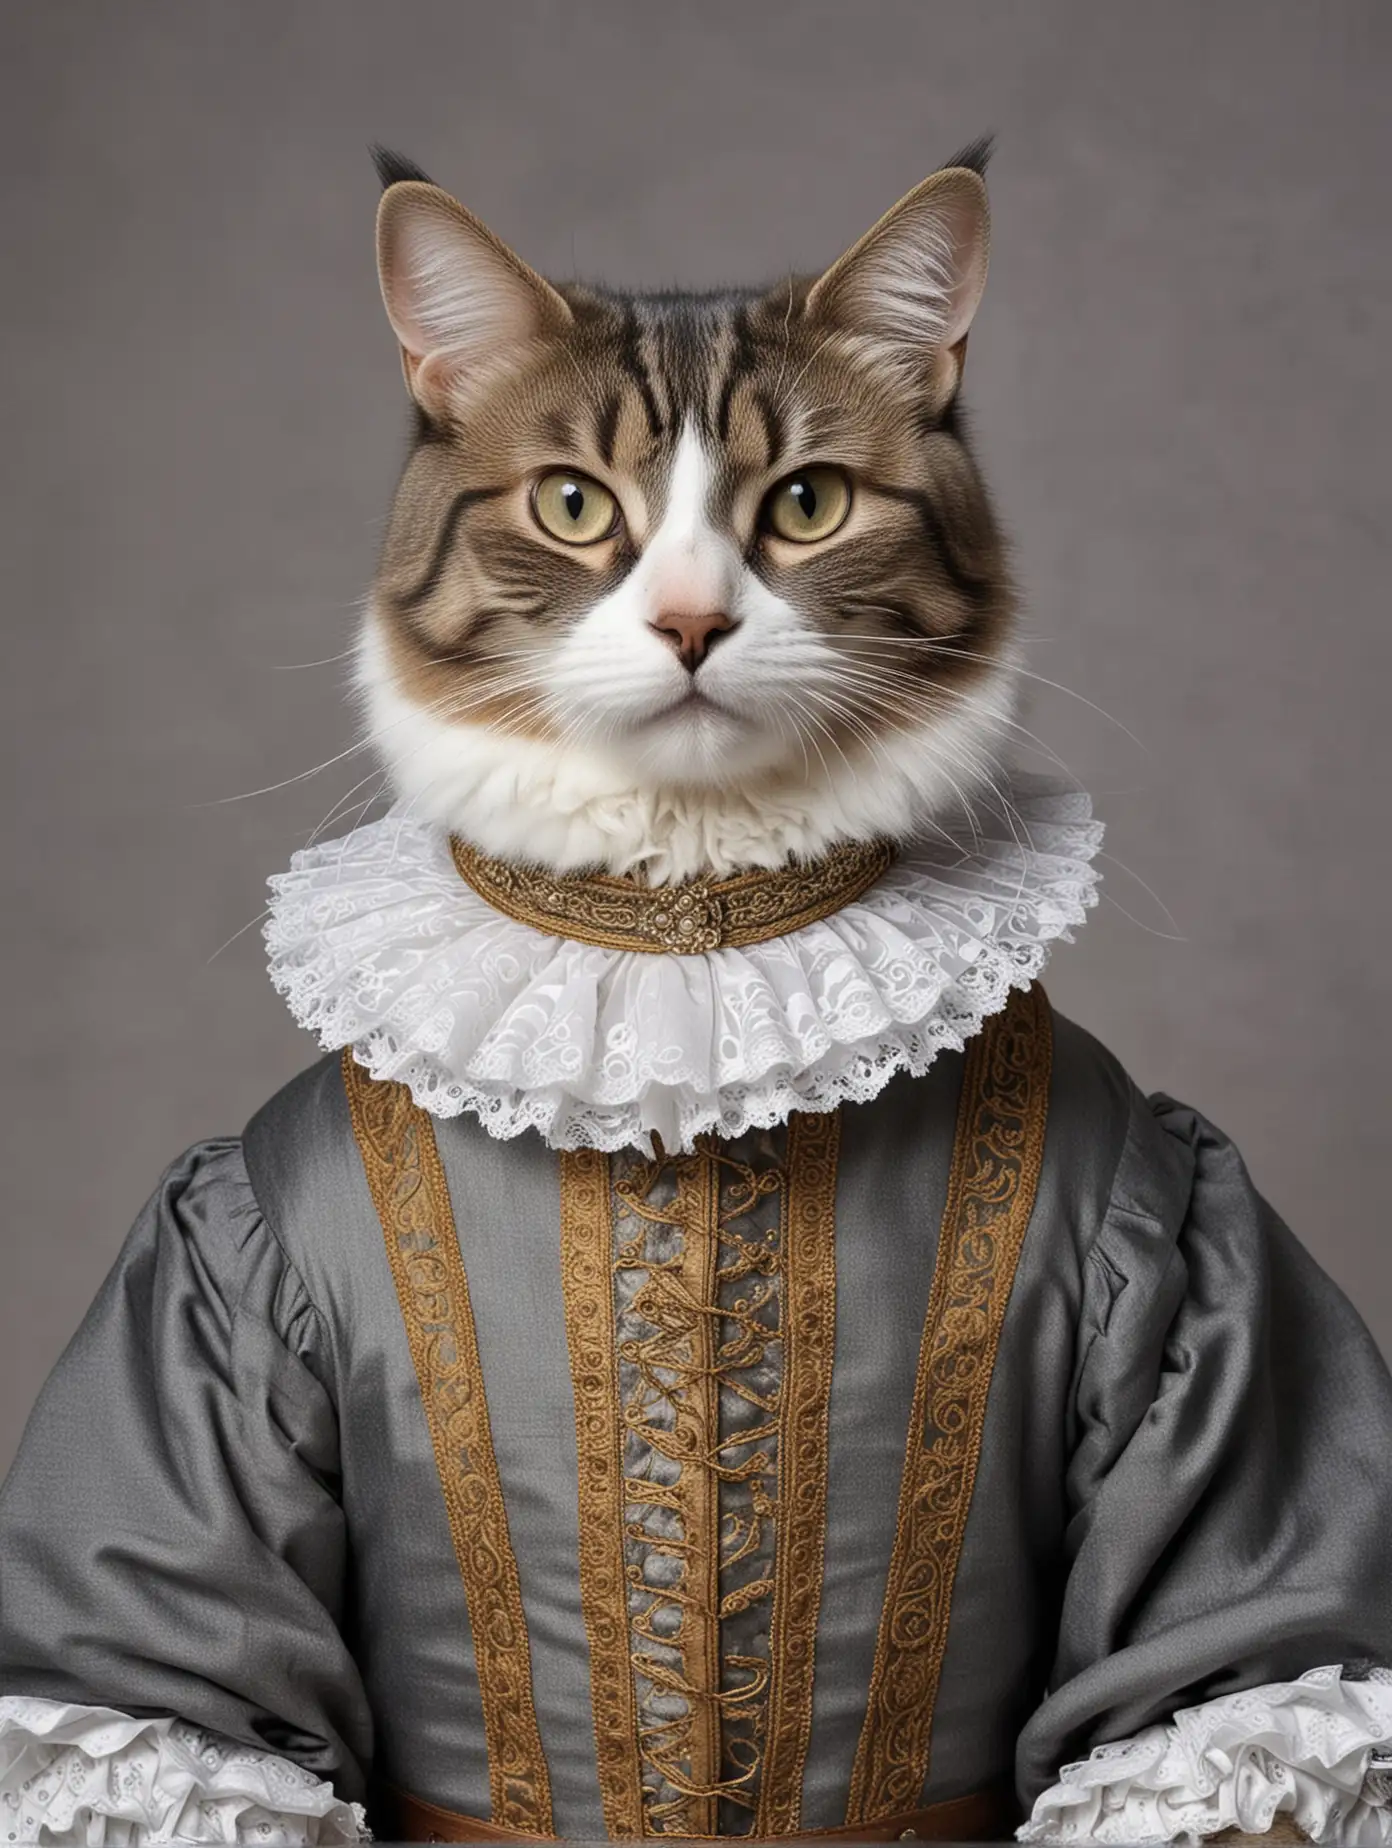 Regal Feline in TudorInspired Attire on Grey Background